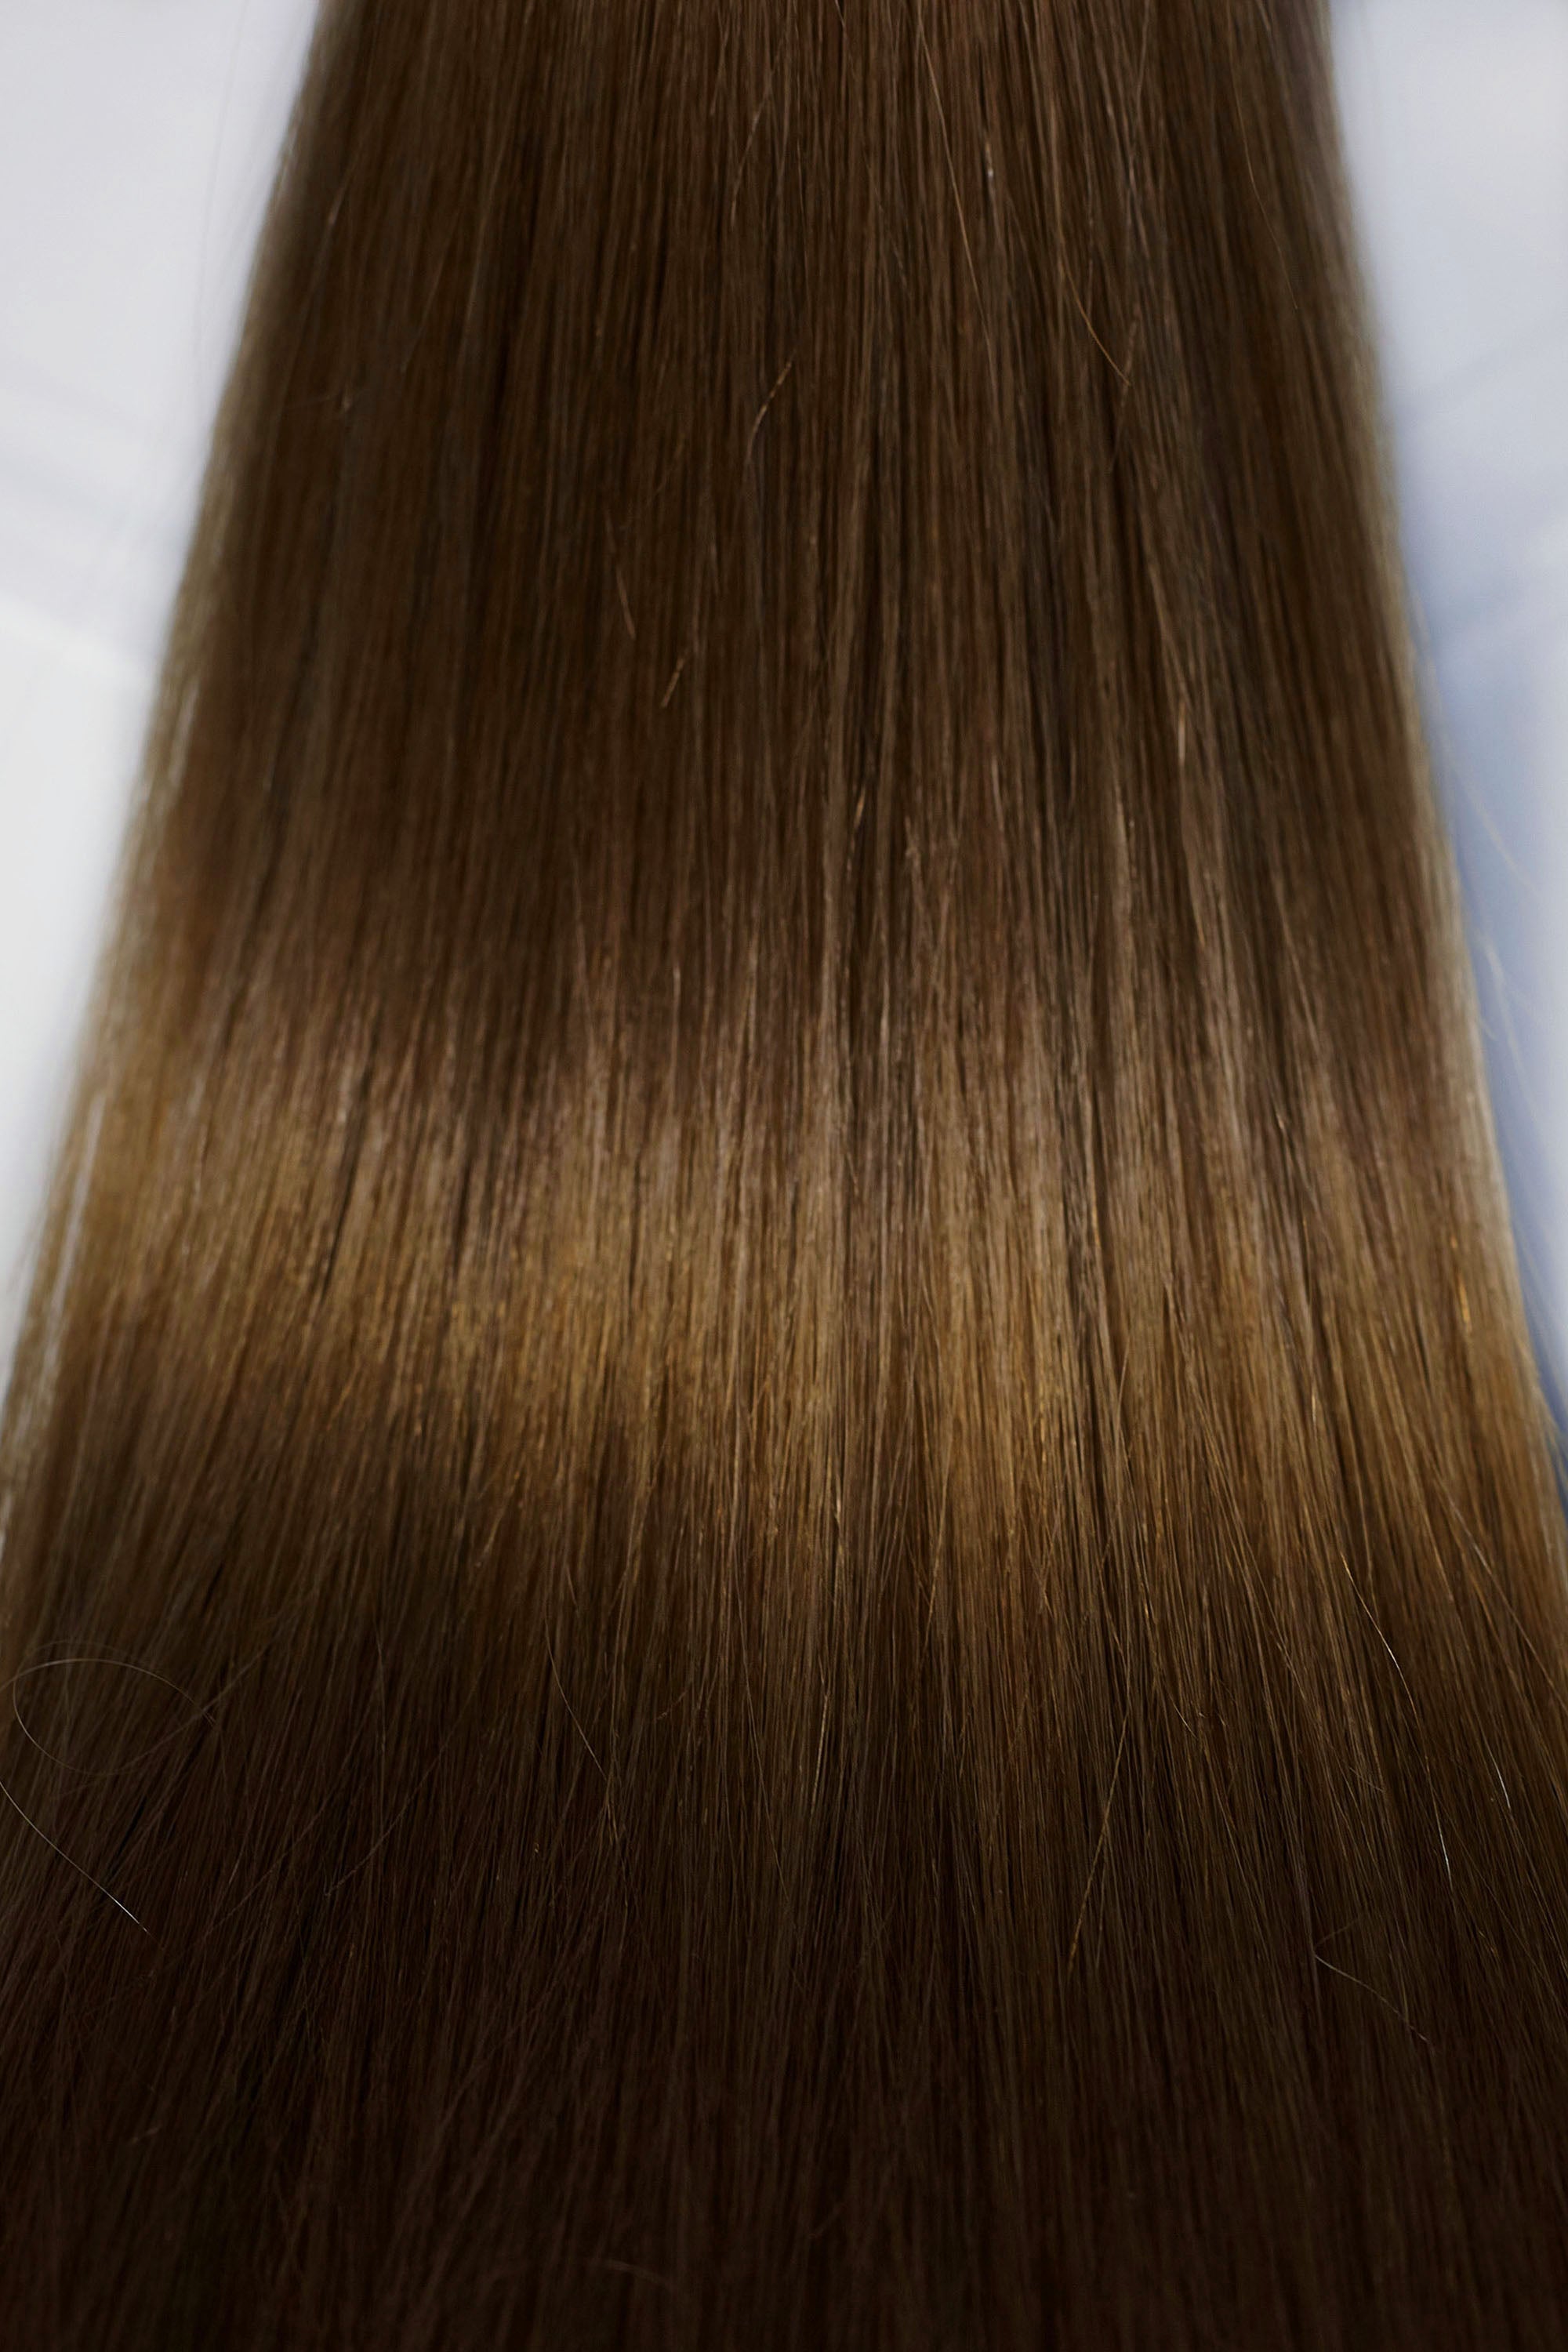 Behair professional Keratin Tip "Premium" 20" (50cm) Natural Straight Honey Walnut Brown #5 - 25g (Standart - 0.7g each pcs) hair extensions